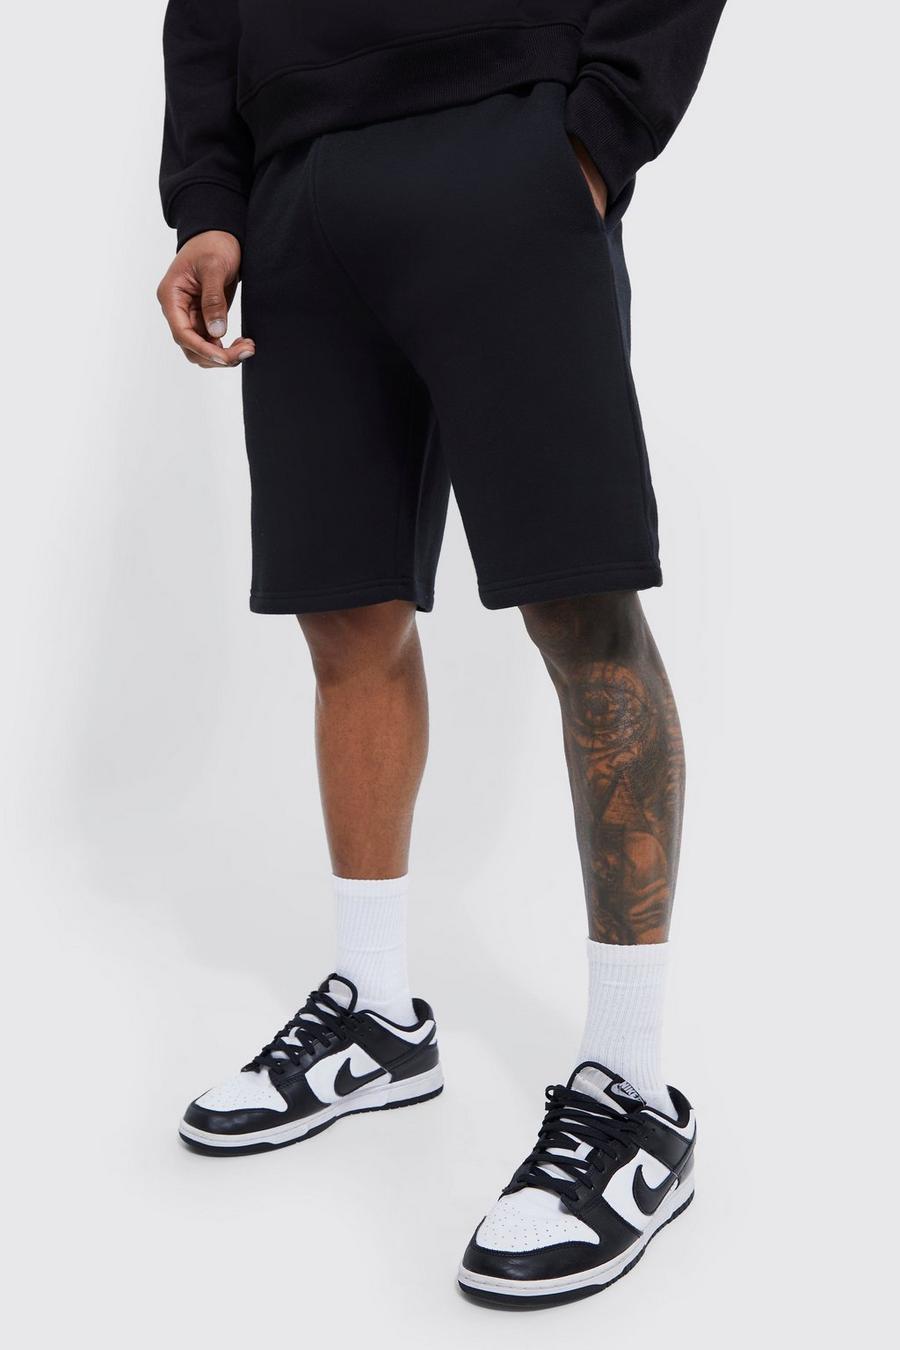 Basic Loose Fit Mid Length Jersey Short, Black nero